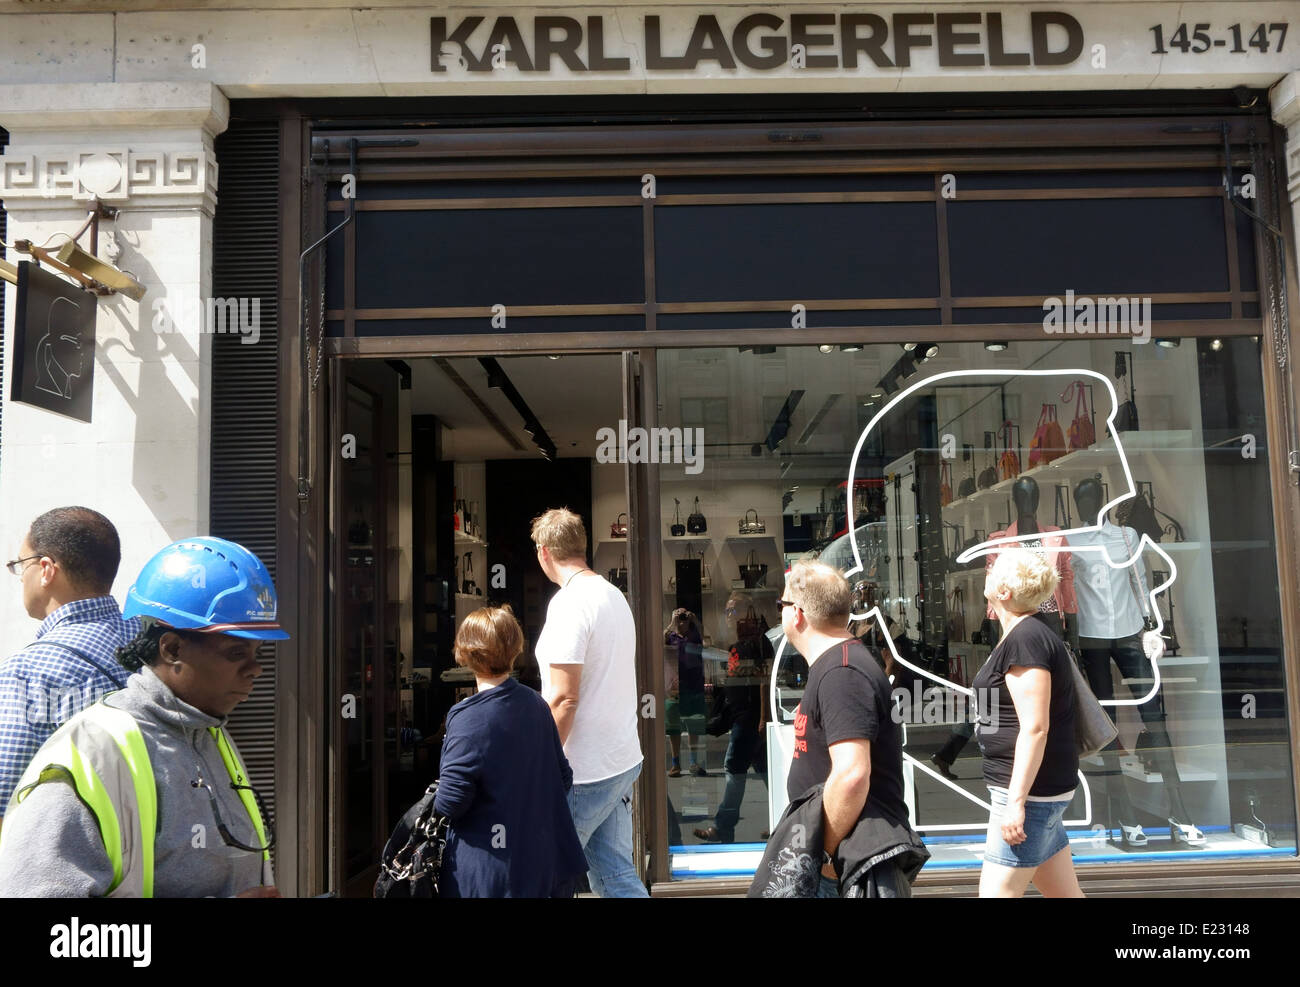 Karl Lagerfeld fashion store in Regent Street, London Stock Photo - Alamy